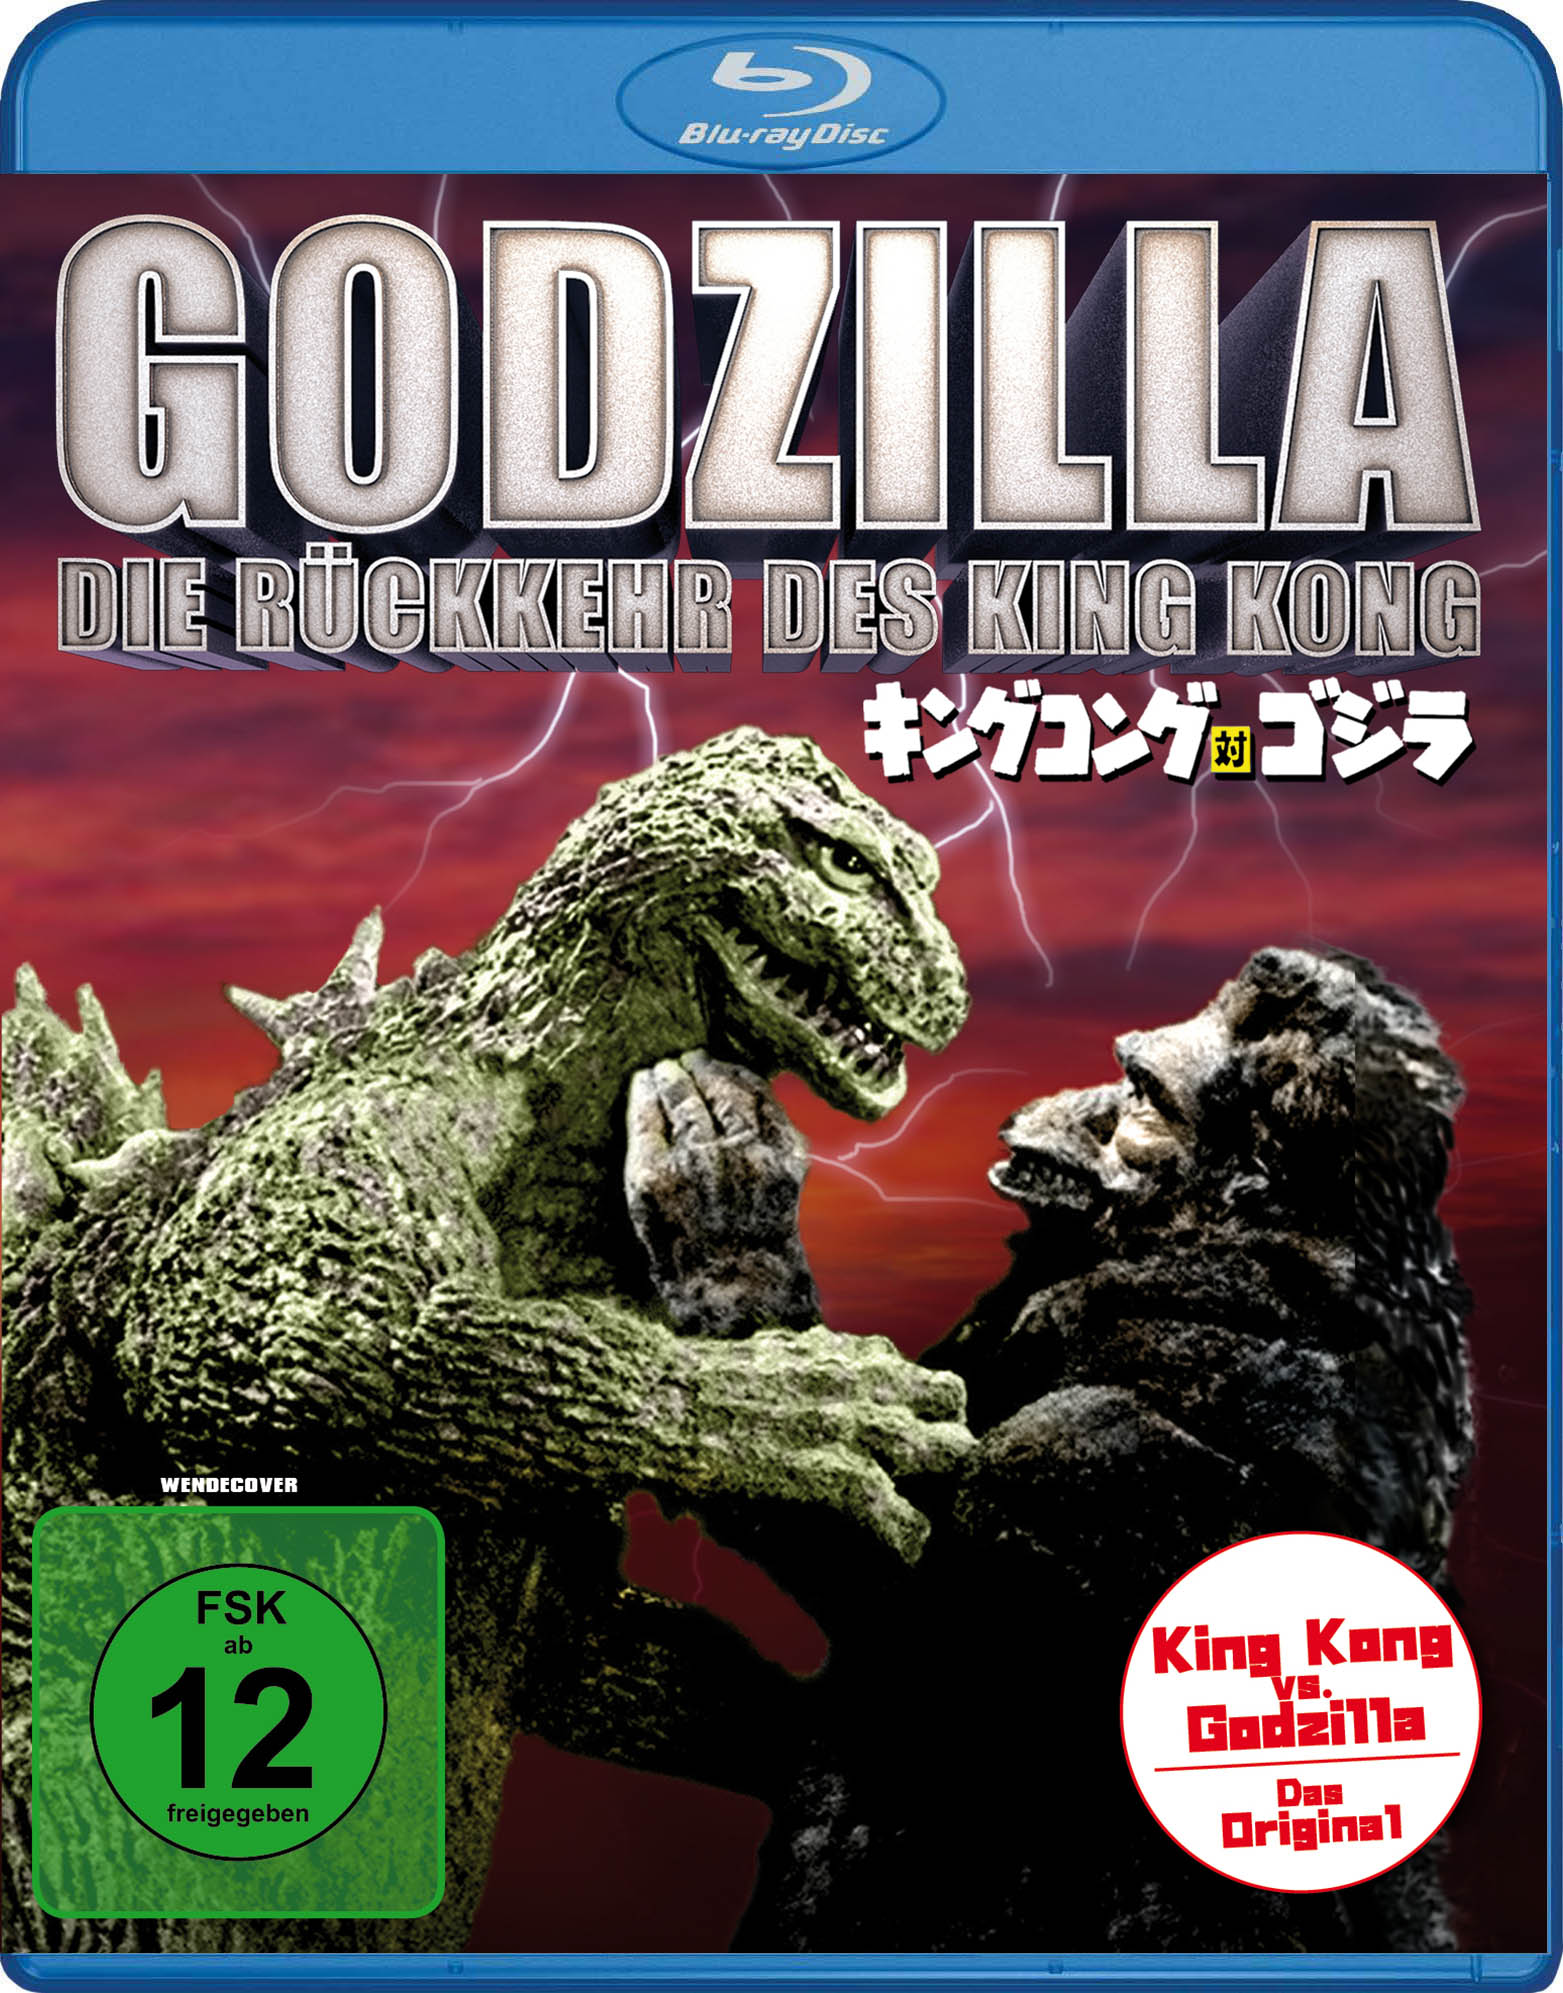 Kong des Die Blu-ray Rückkehr King - Godzilla